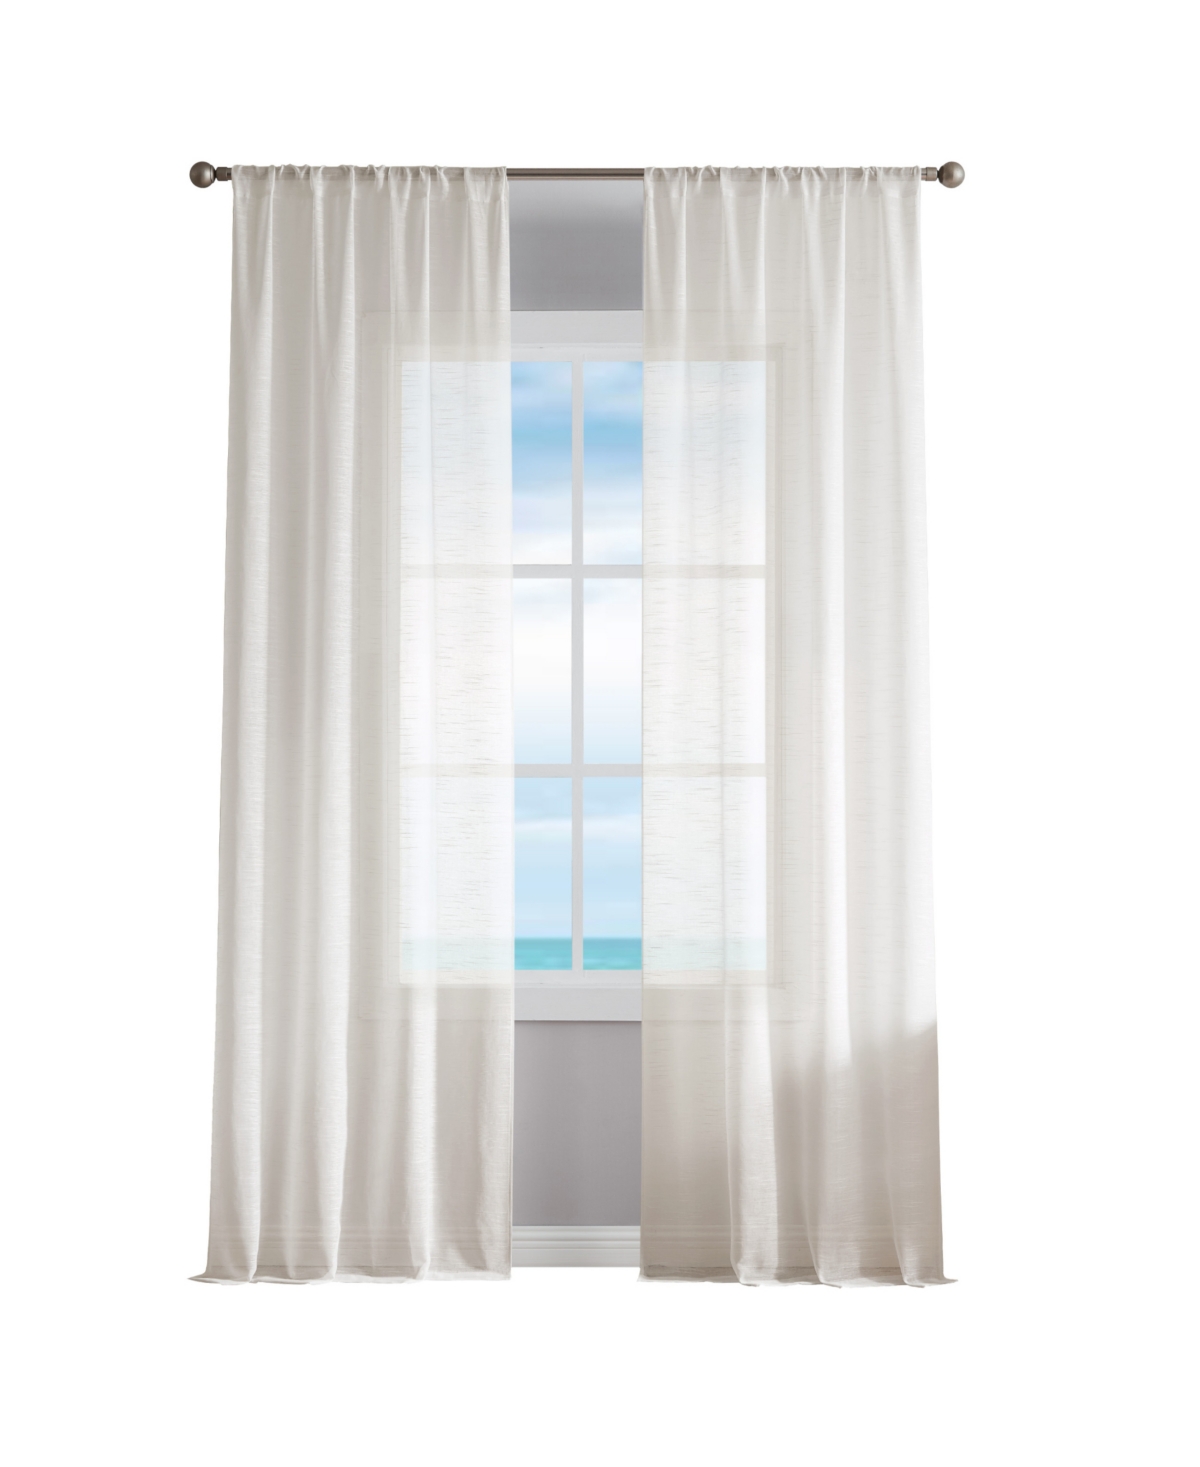 Nautica Erasmus Sheer Rod Pocket Window Curtain Panel Pair, 38" X 108" In Taupe